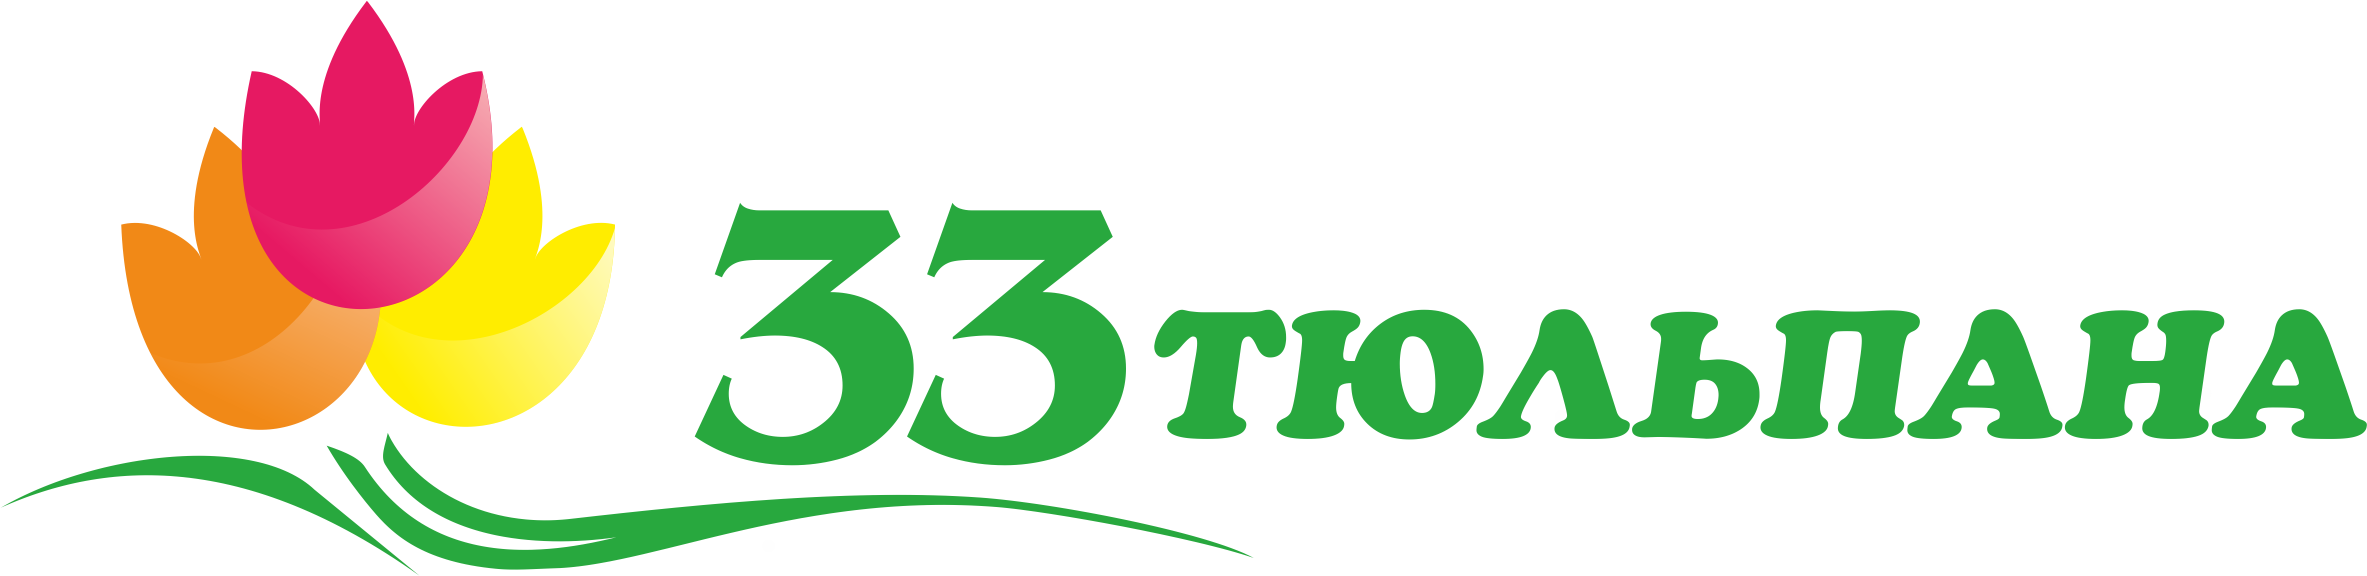 Лого: 33 тюльпана